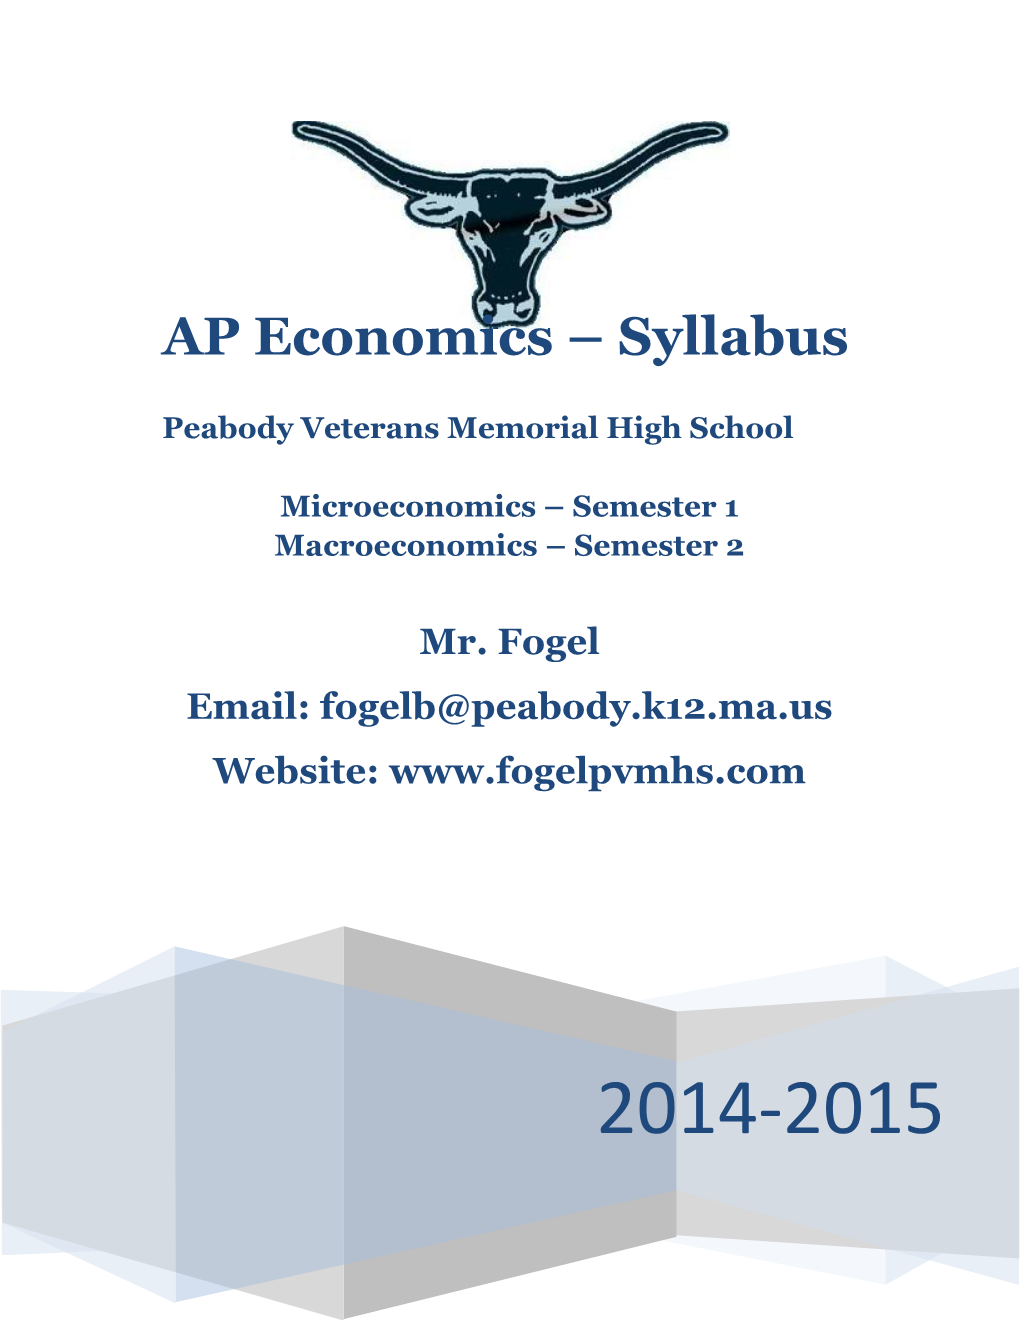 AP Economics - Syllabus